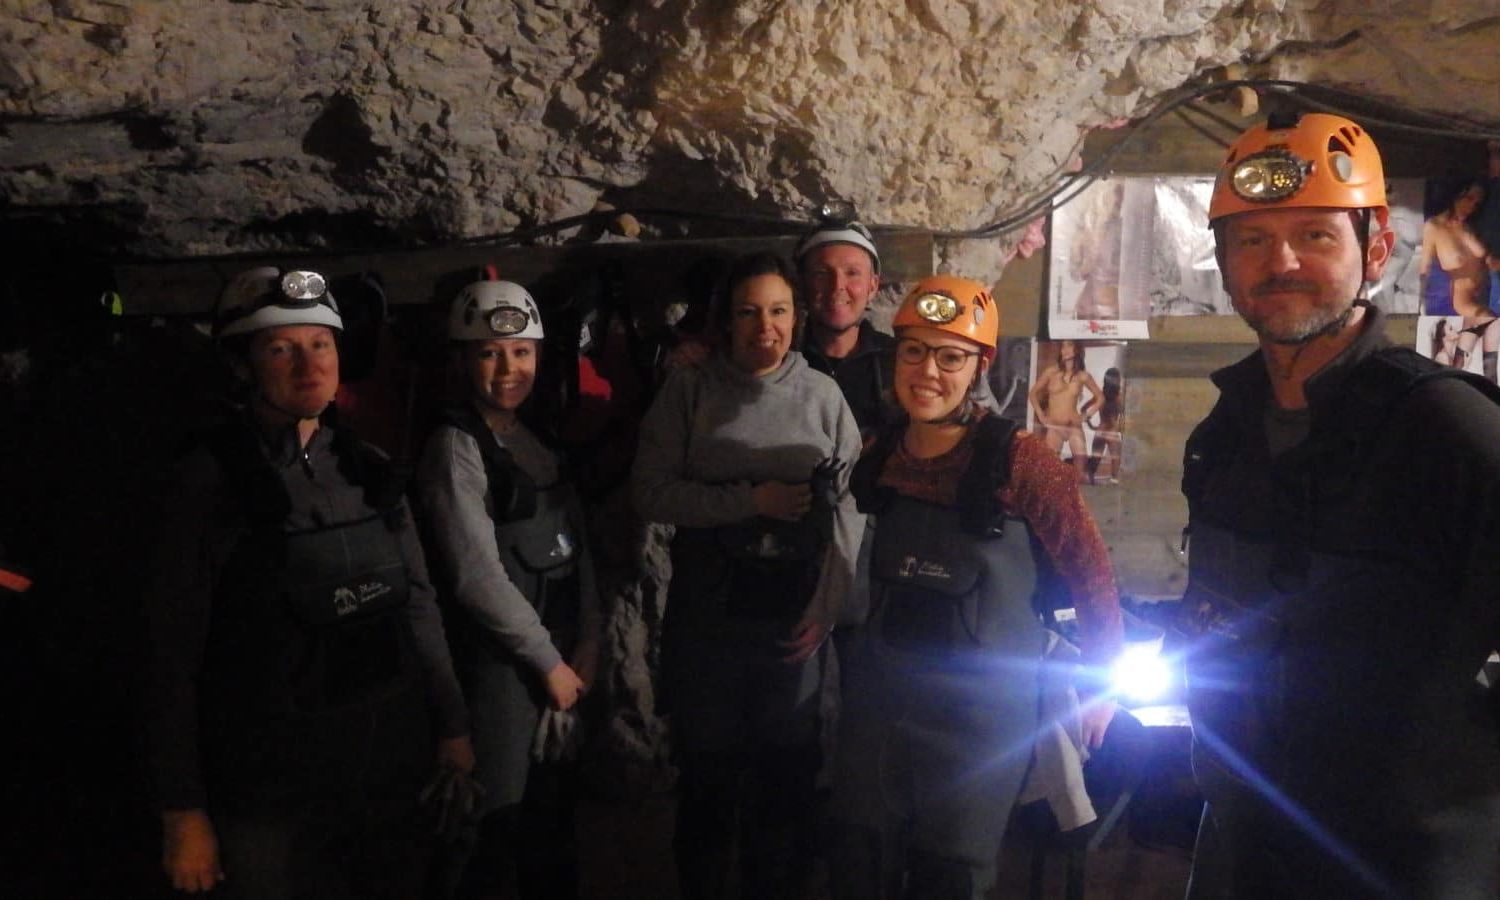 Explore the caves in Slovenia